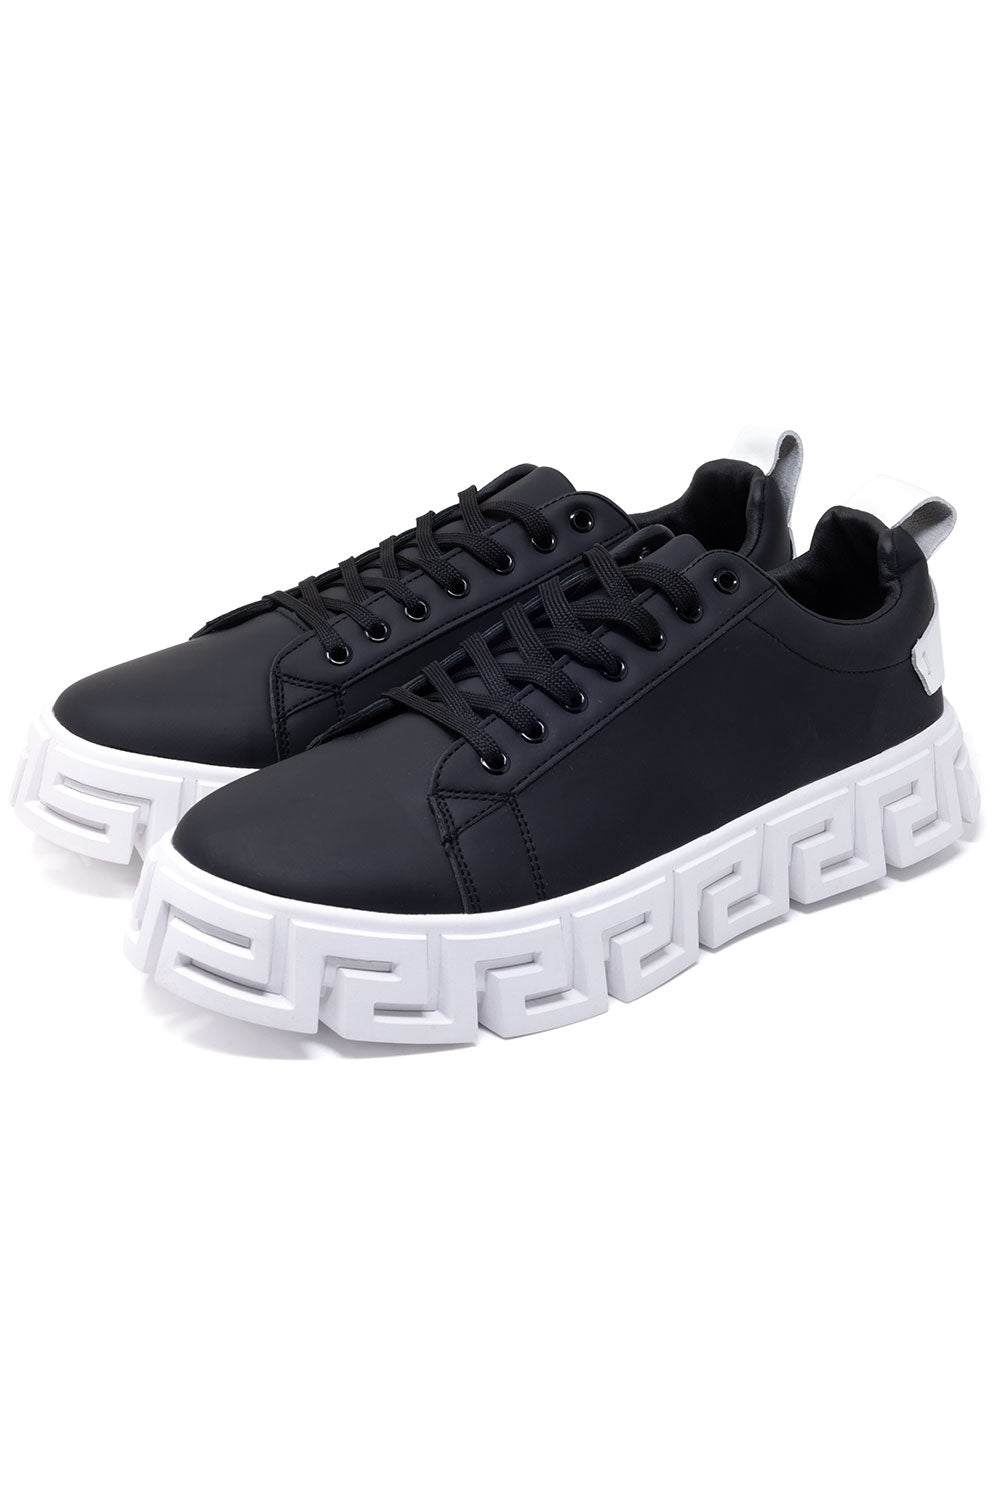 Barabas Men's Premium Greek Key Pattern Sole Sneakers 4SK06 Black White